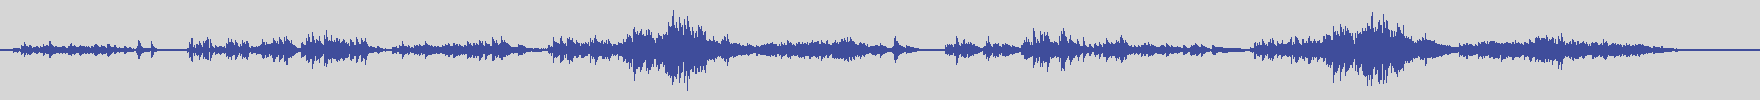 big_music_classic [BMC011] Marco Noia - Rikku's Theme [] audio wave form